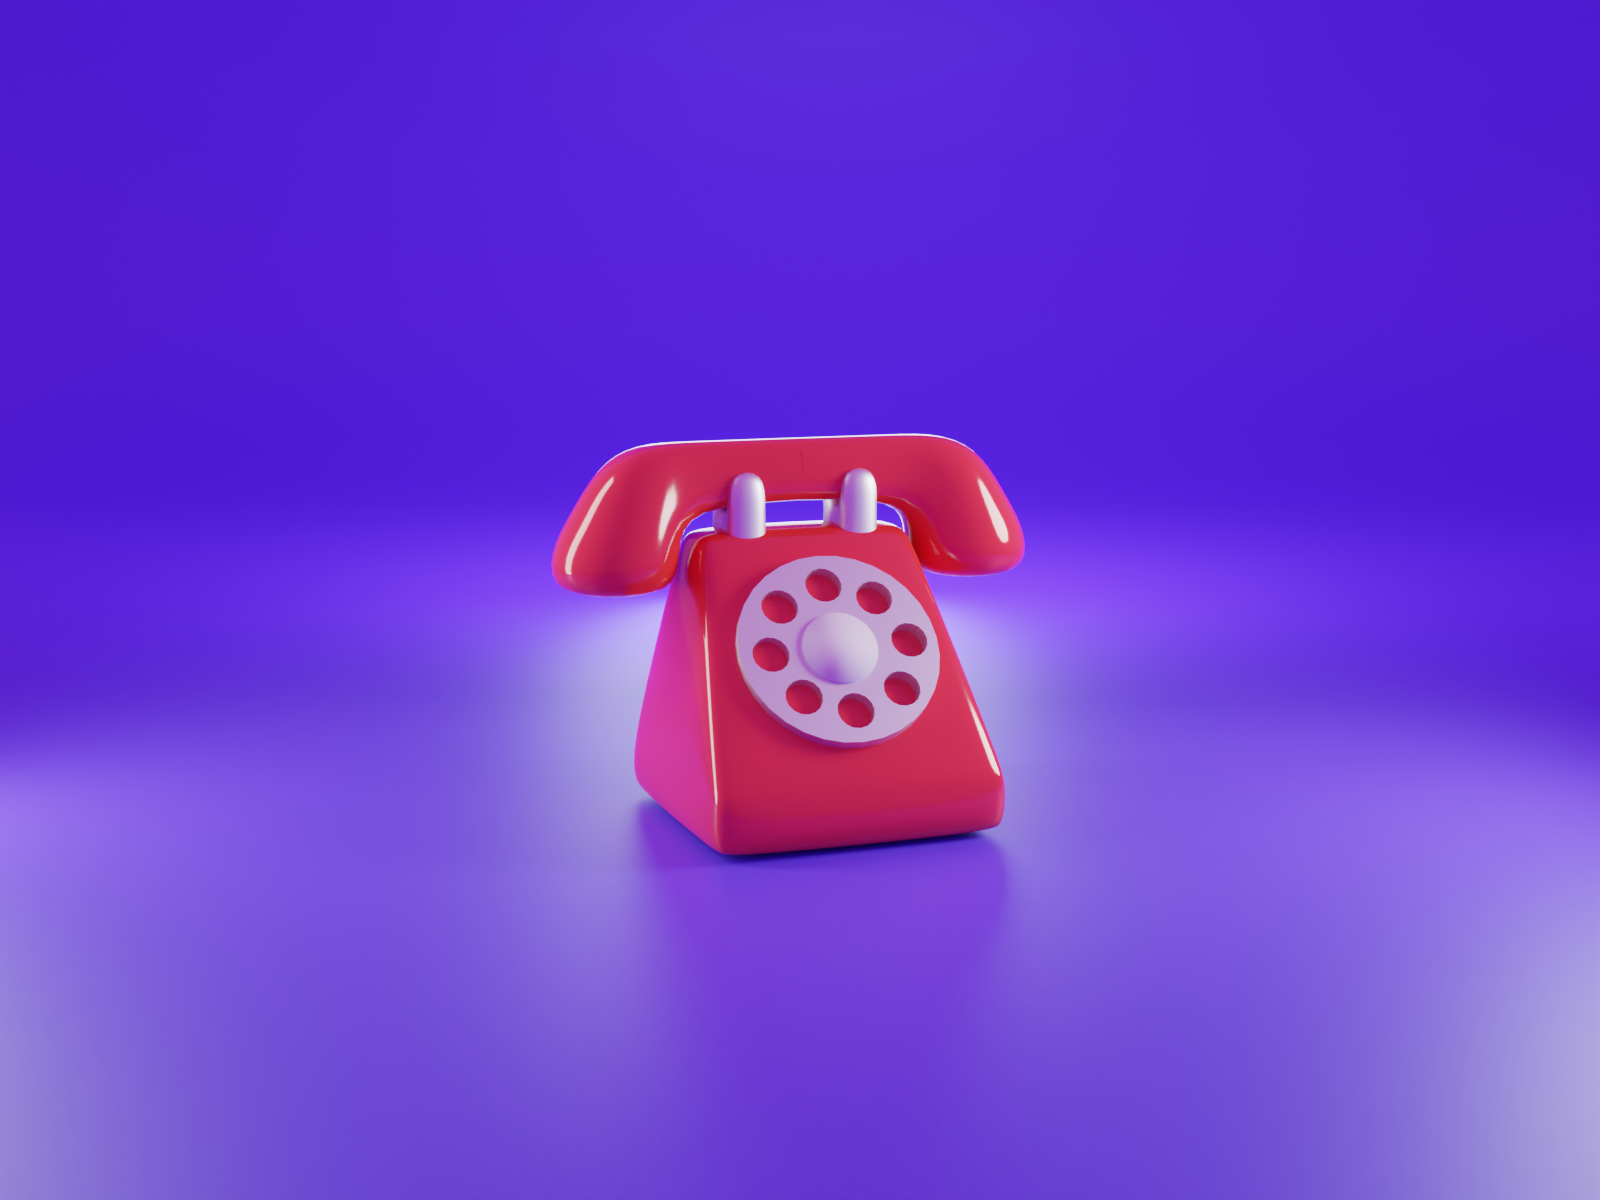 Old Telephone by Viraj Nemlekar on Dribbble